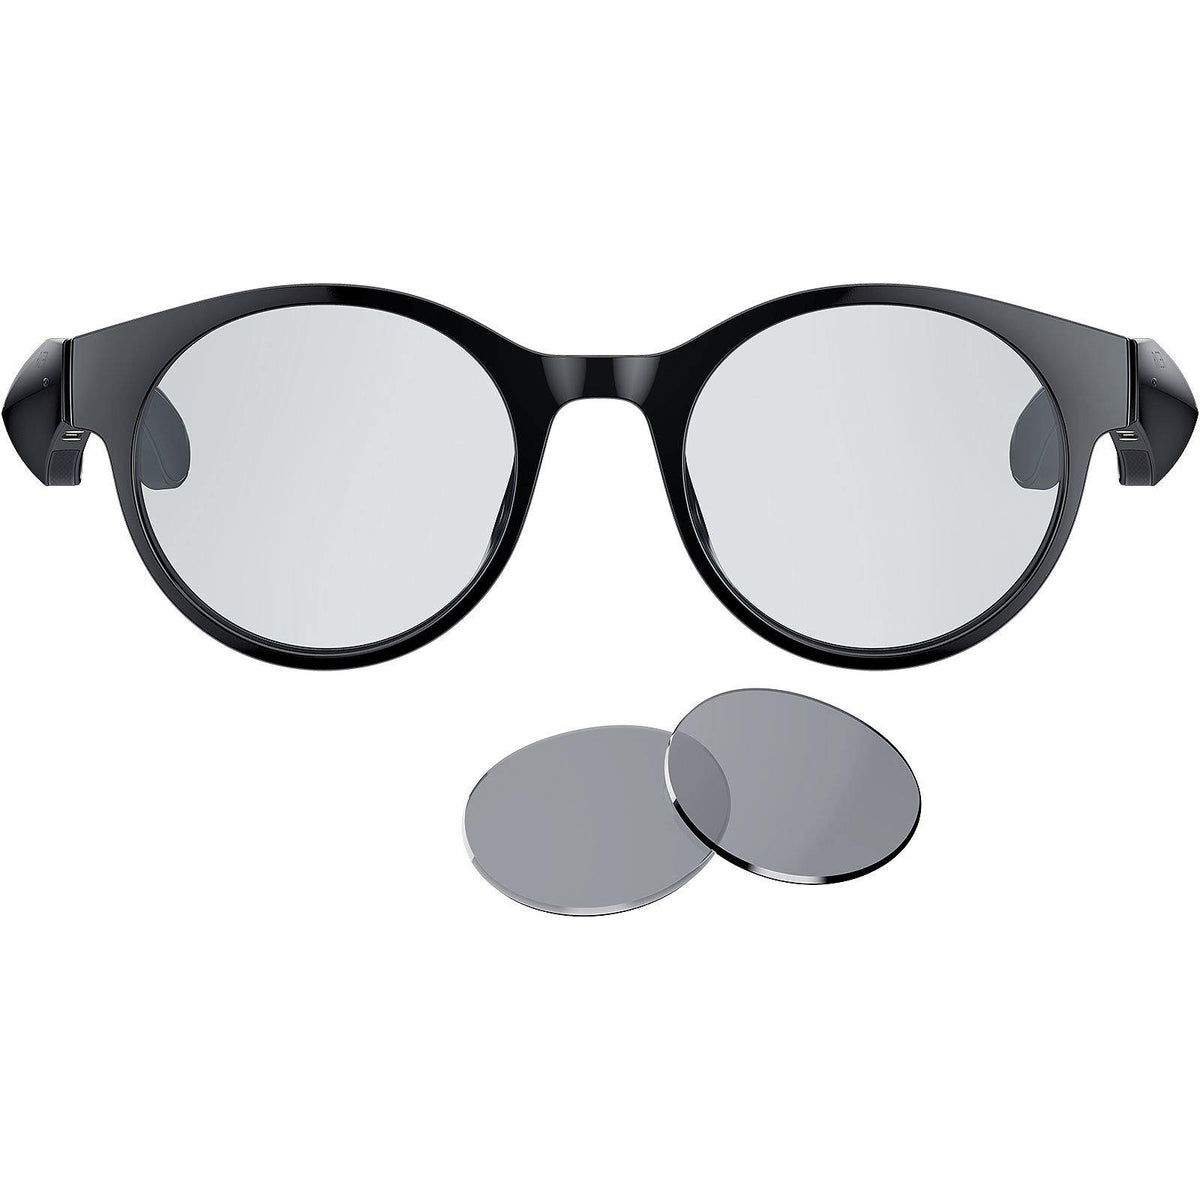 Razer Anzu maroc Prix smart glasses pas cher - smartmarket.ma